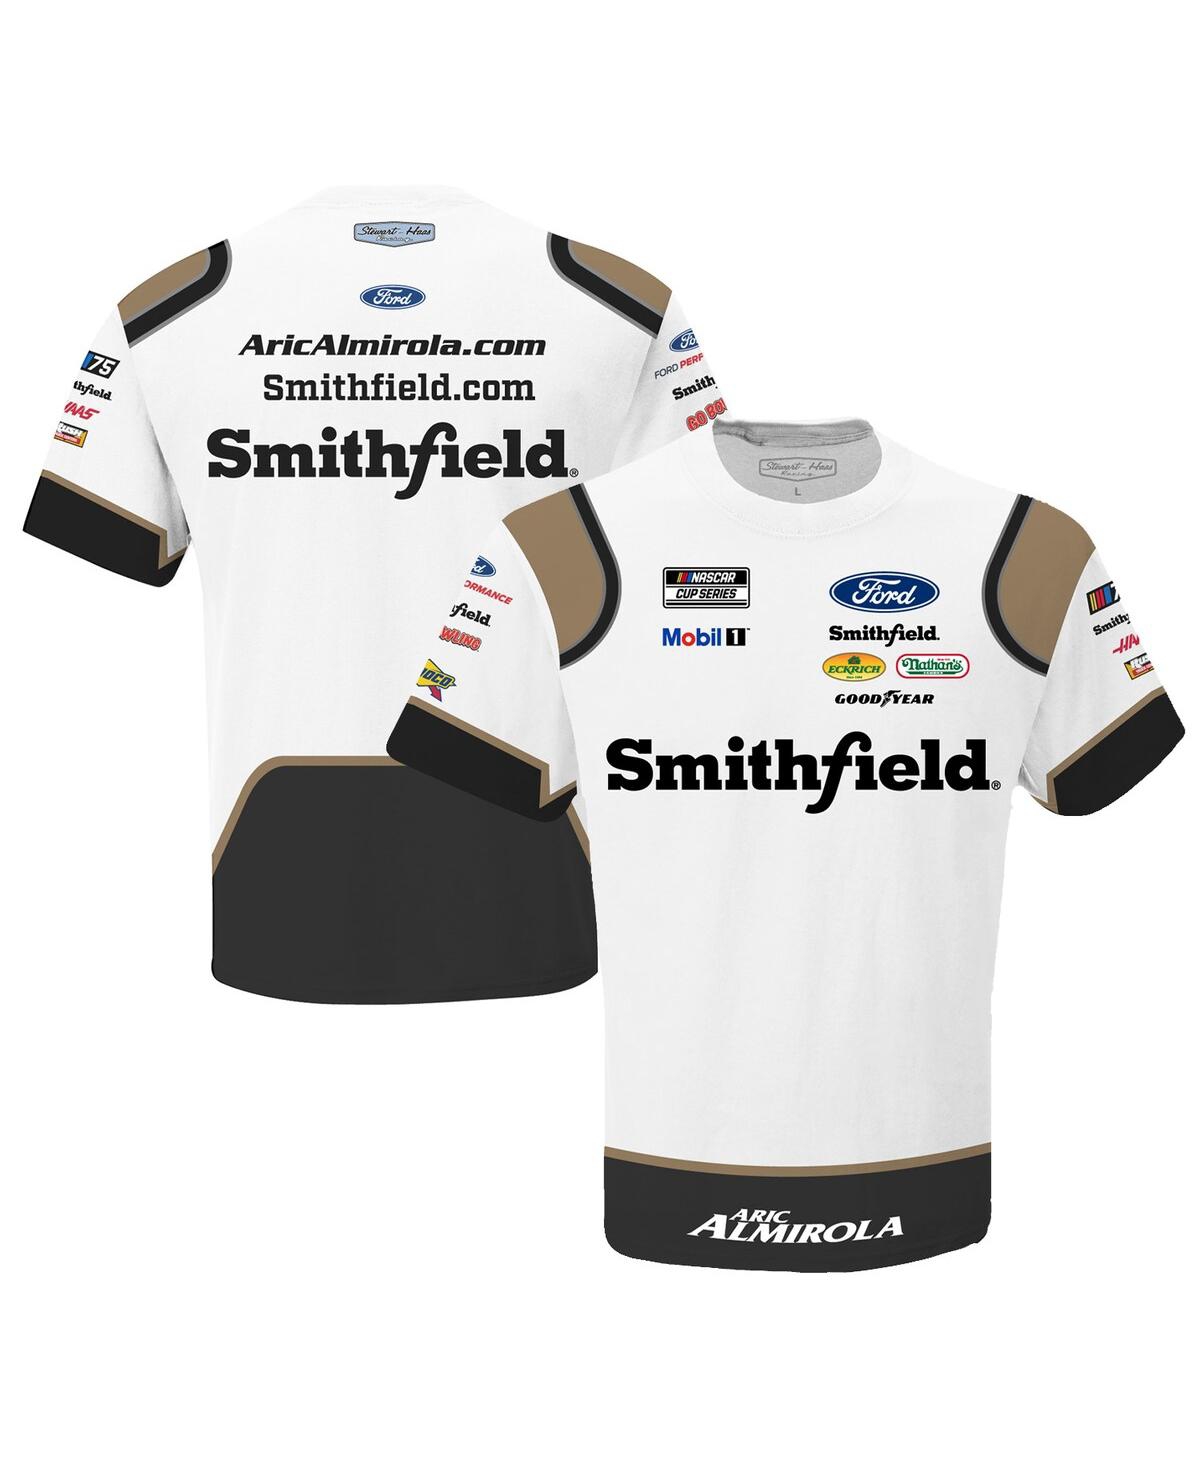 Stewart-haas Racing Team Collection Men's  White Aric Almirola Smithfield Sublimated Team Uniform T-s